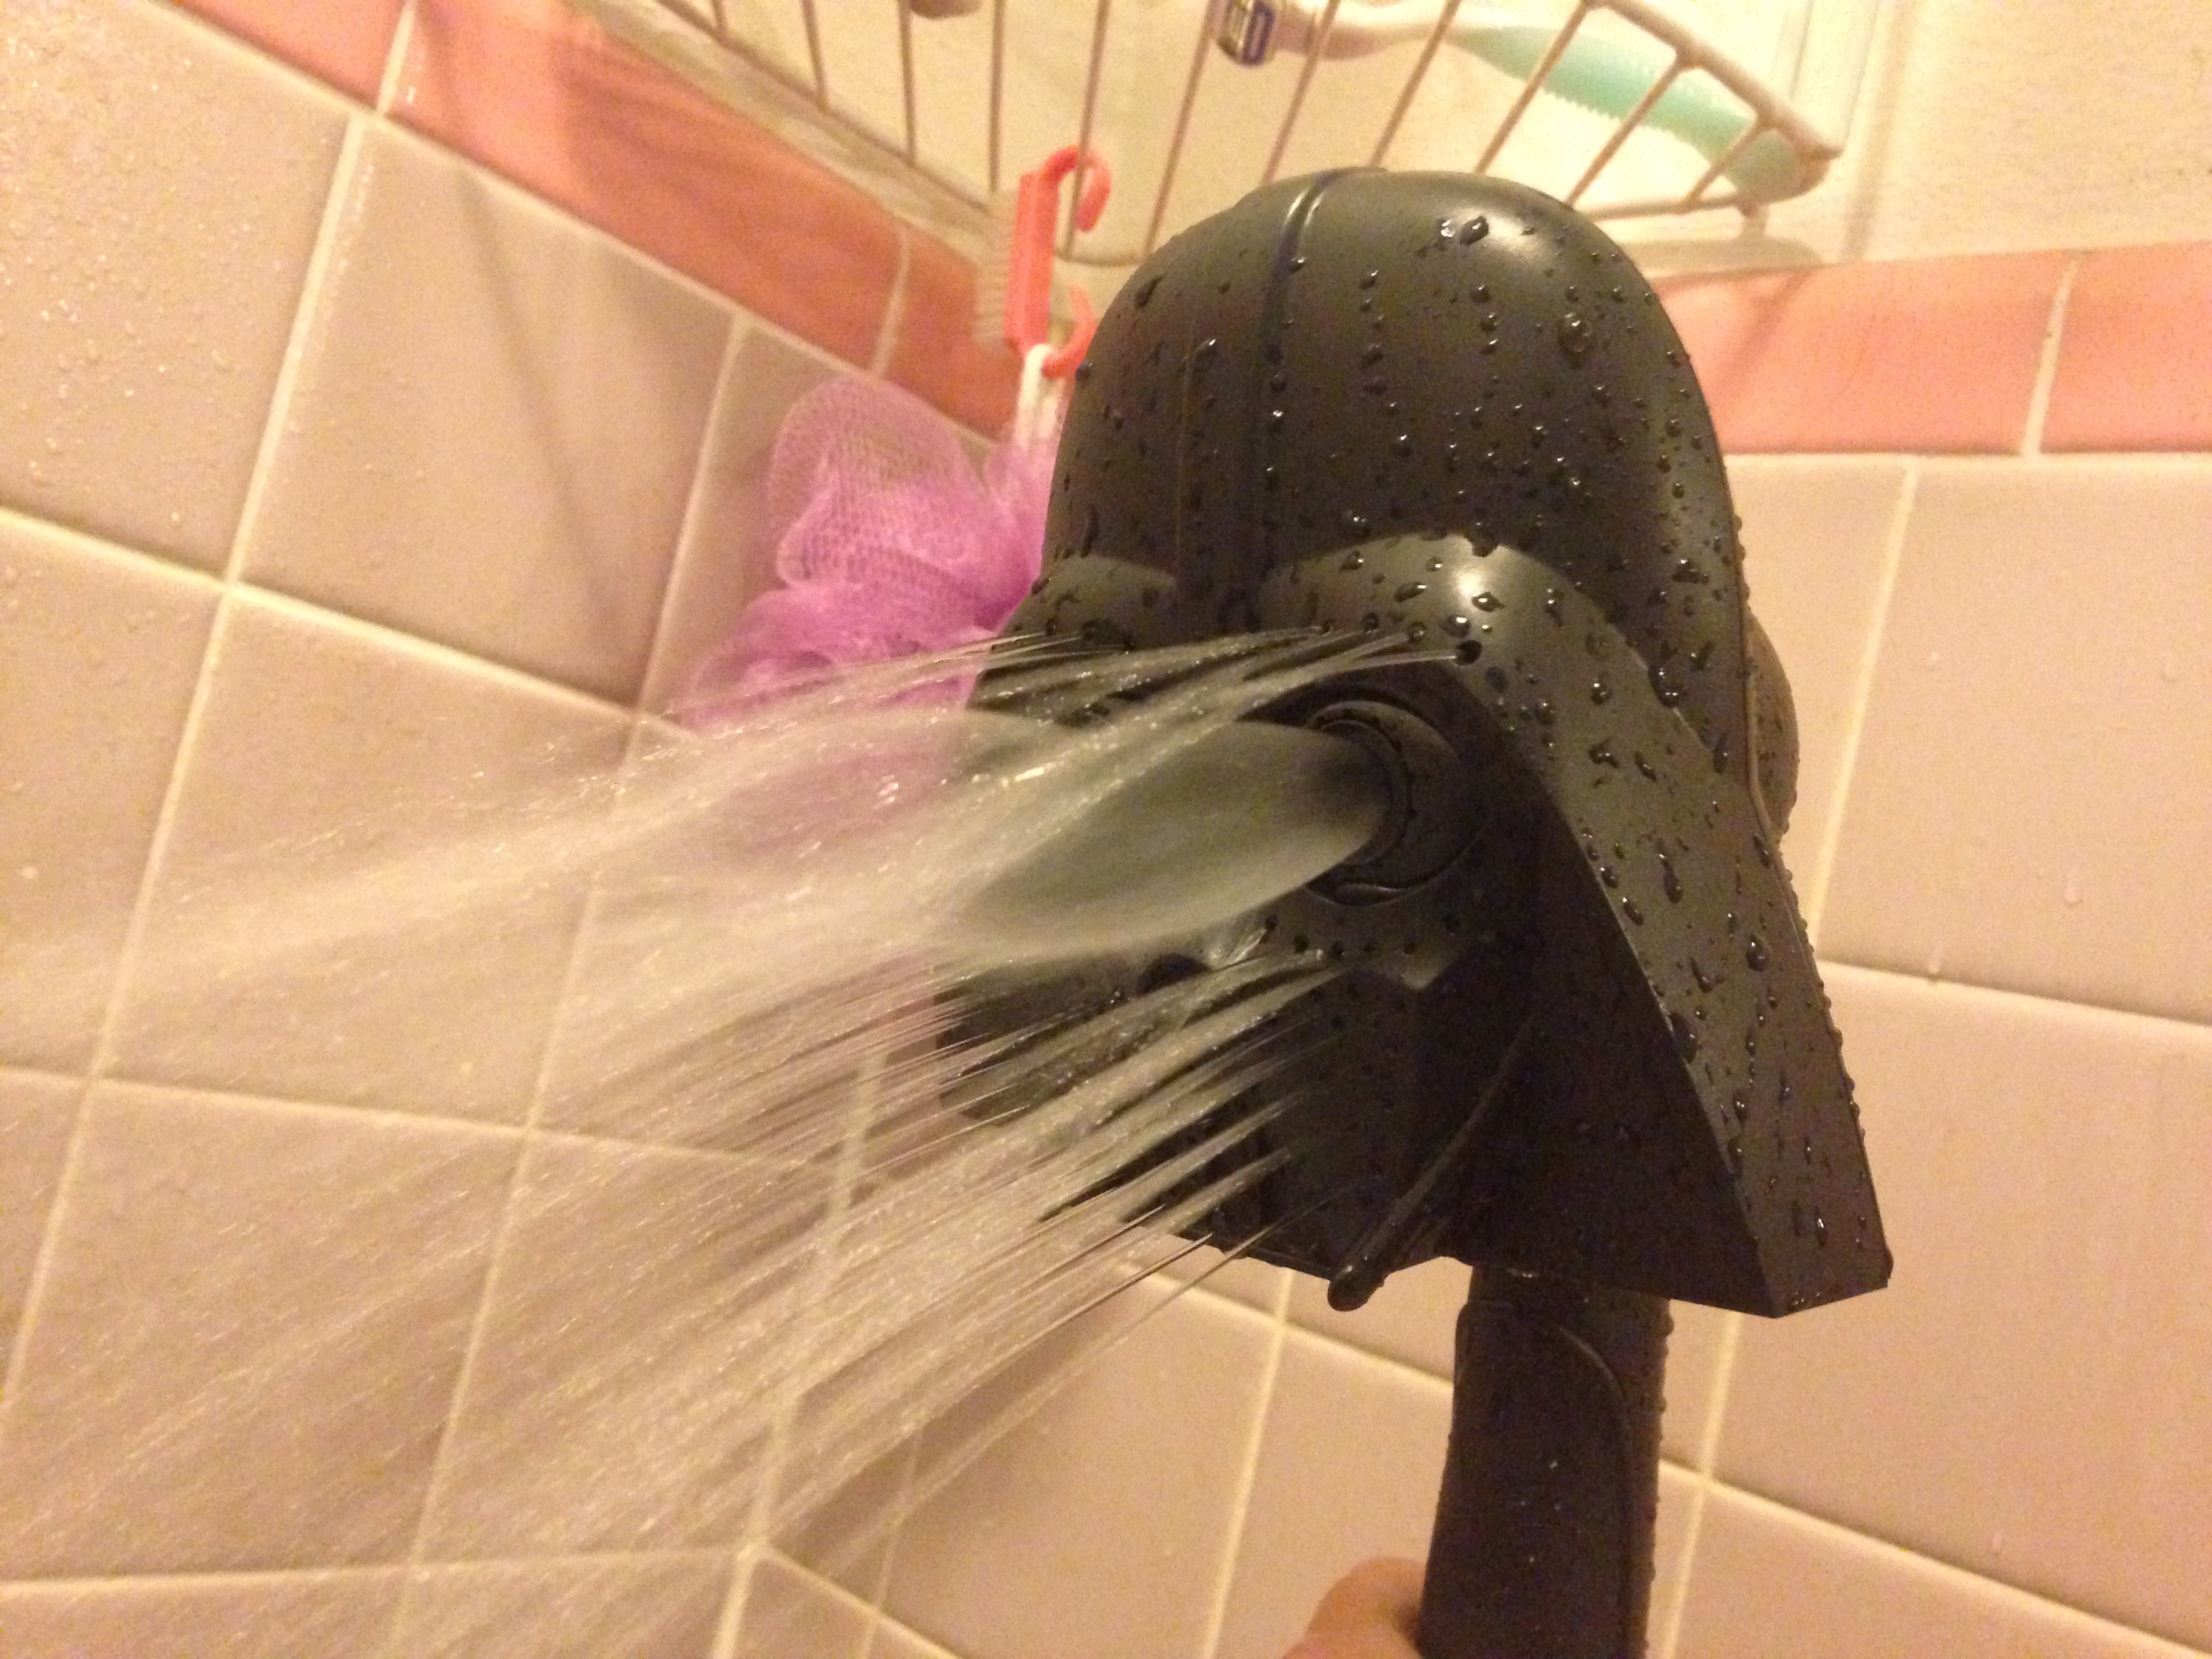 Star wars shower heads, oxygenics